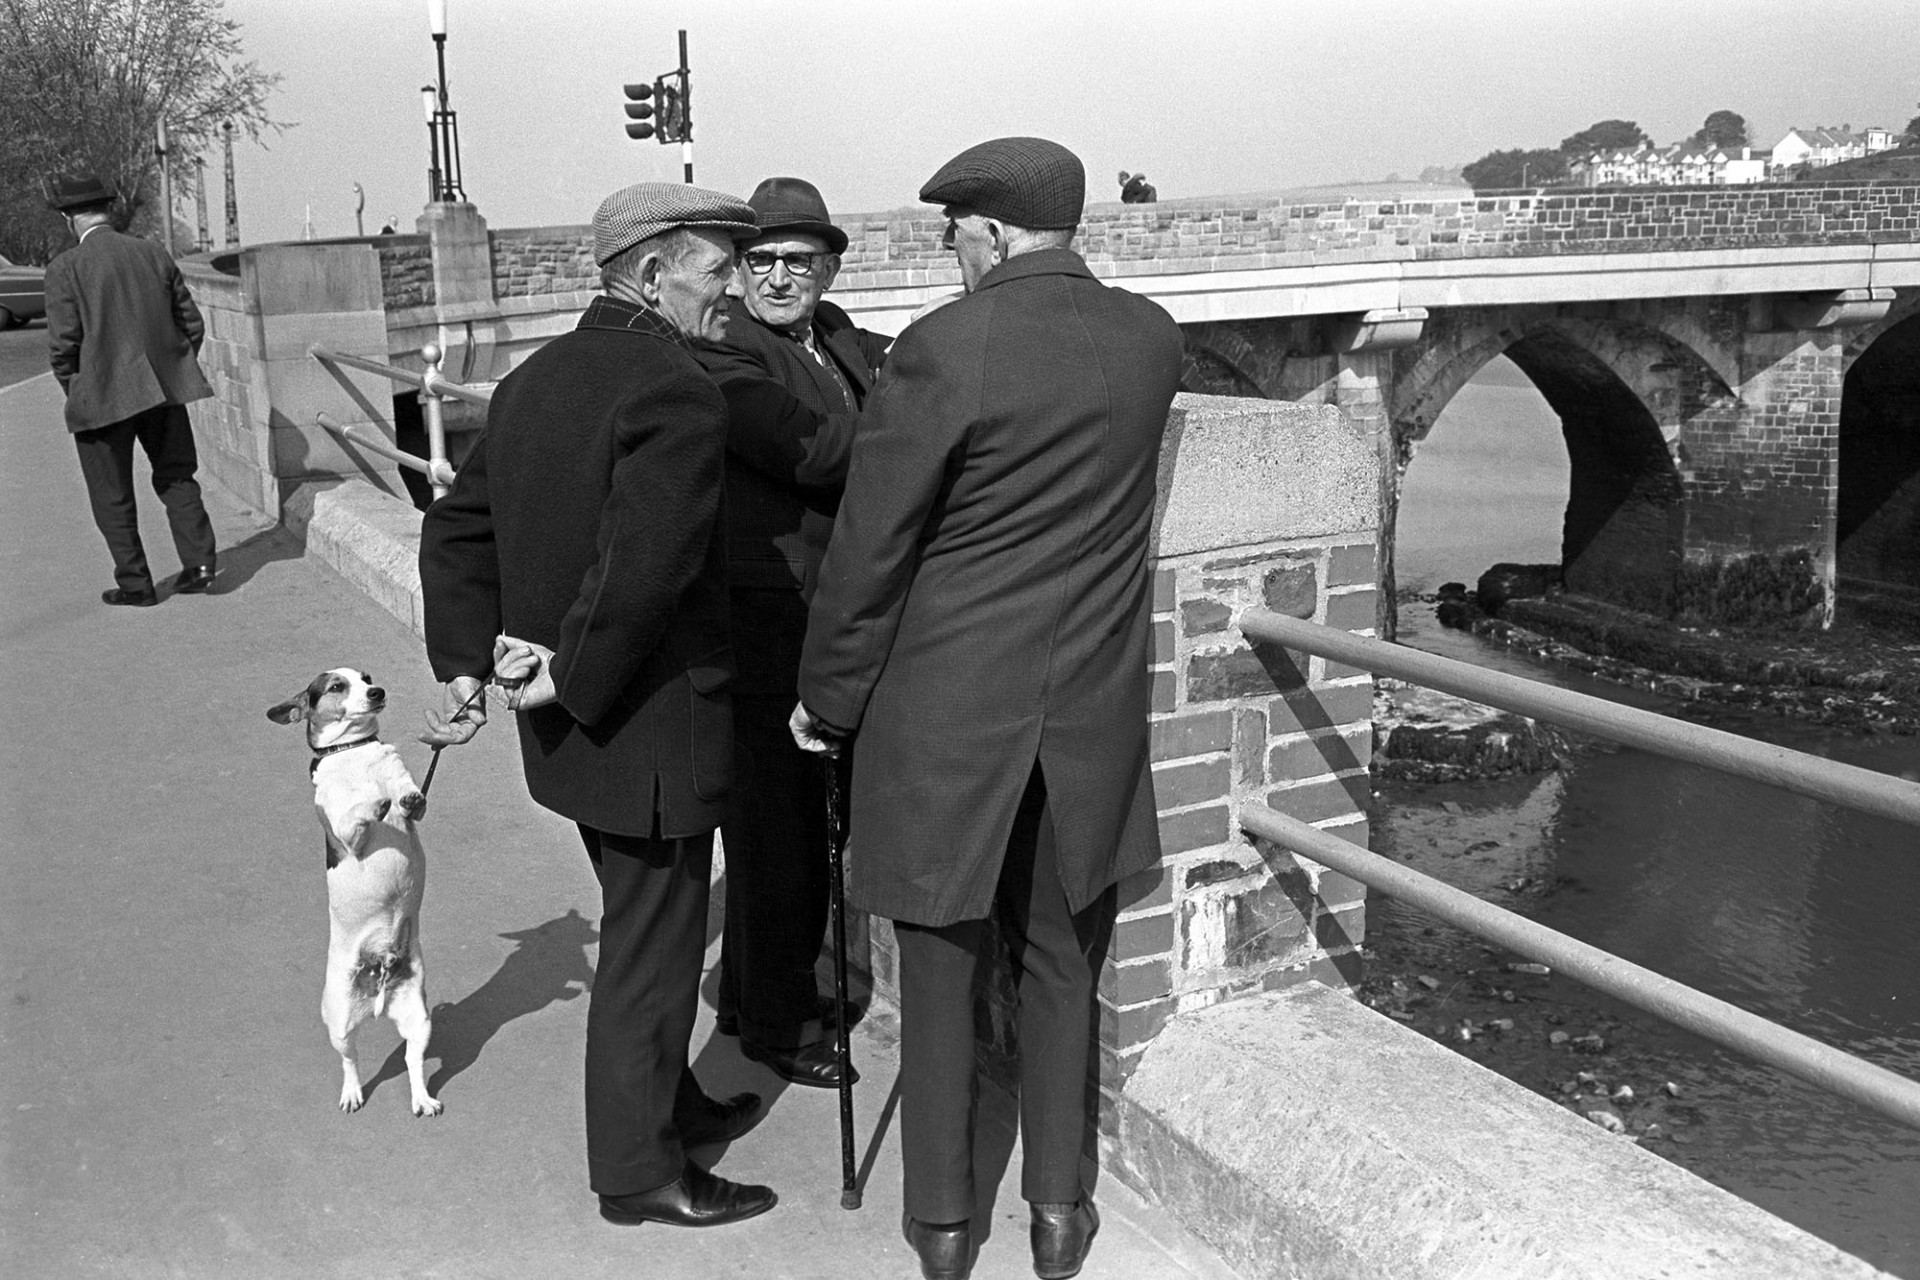 Three men chatting with dog, Humorous, Bridge behind. 
[Three men talking with a dog by Bideford Bridge. The bridge is also known as Bideford Long Bridge and Bideford Old Bridge.]